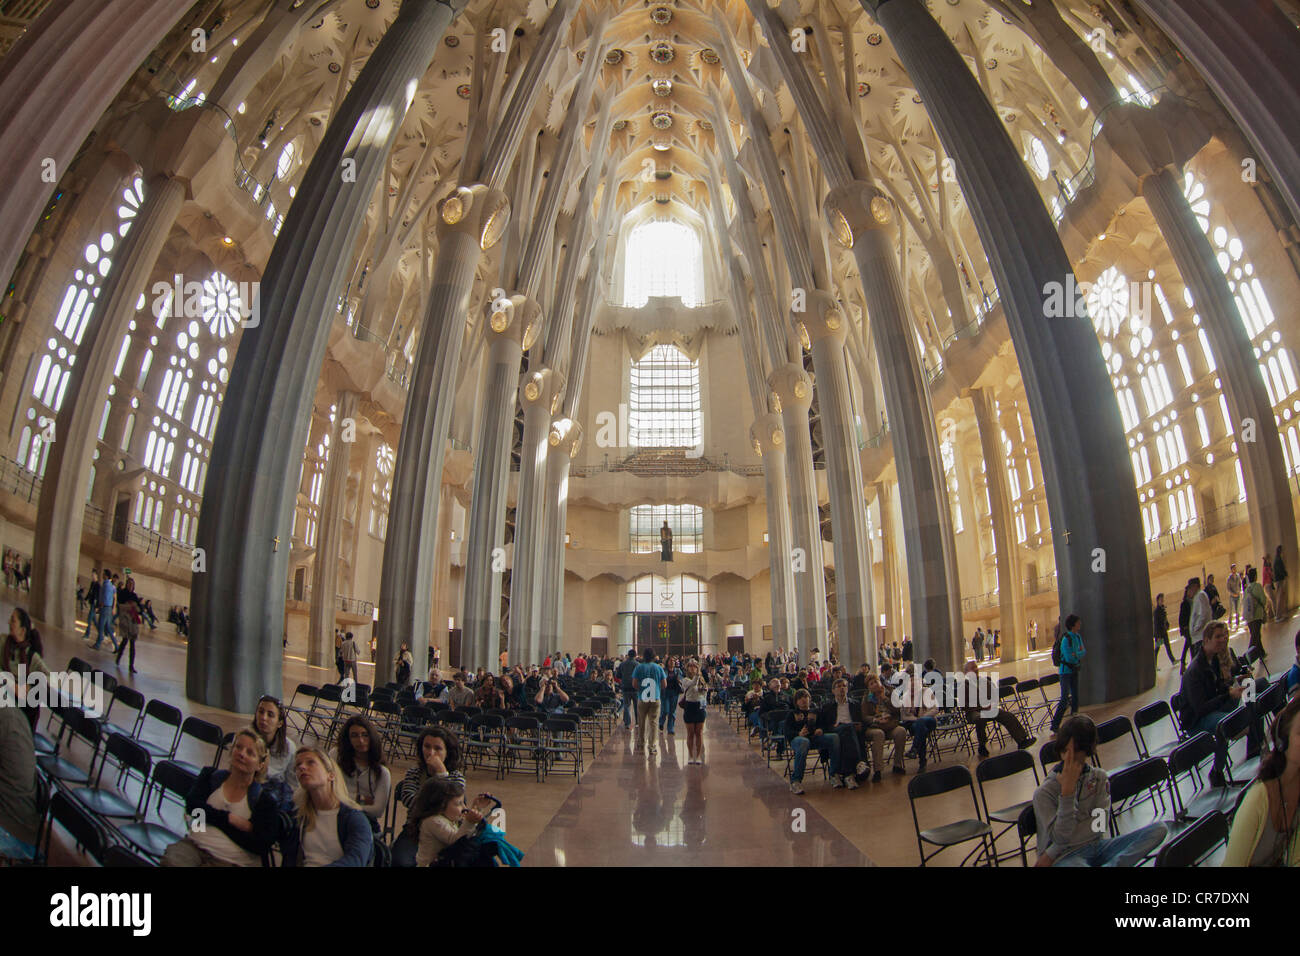 Tree-shaped pillars and ceiling, interior of Sagrada Familia, Basílica i Temple Expiatori de la Sagrada Família, Basilica and Stock Photo